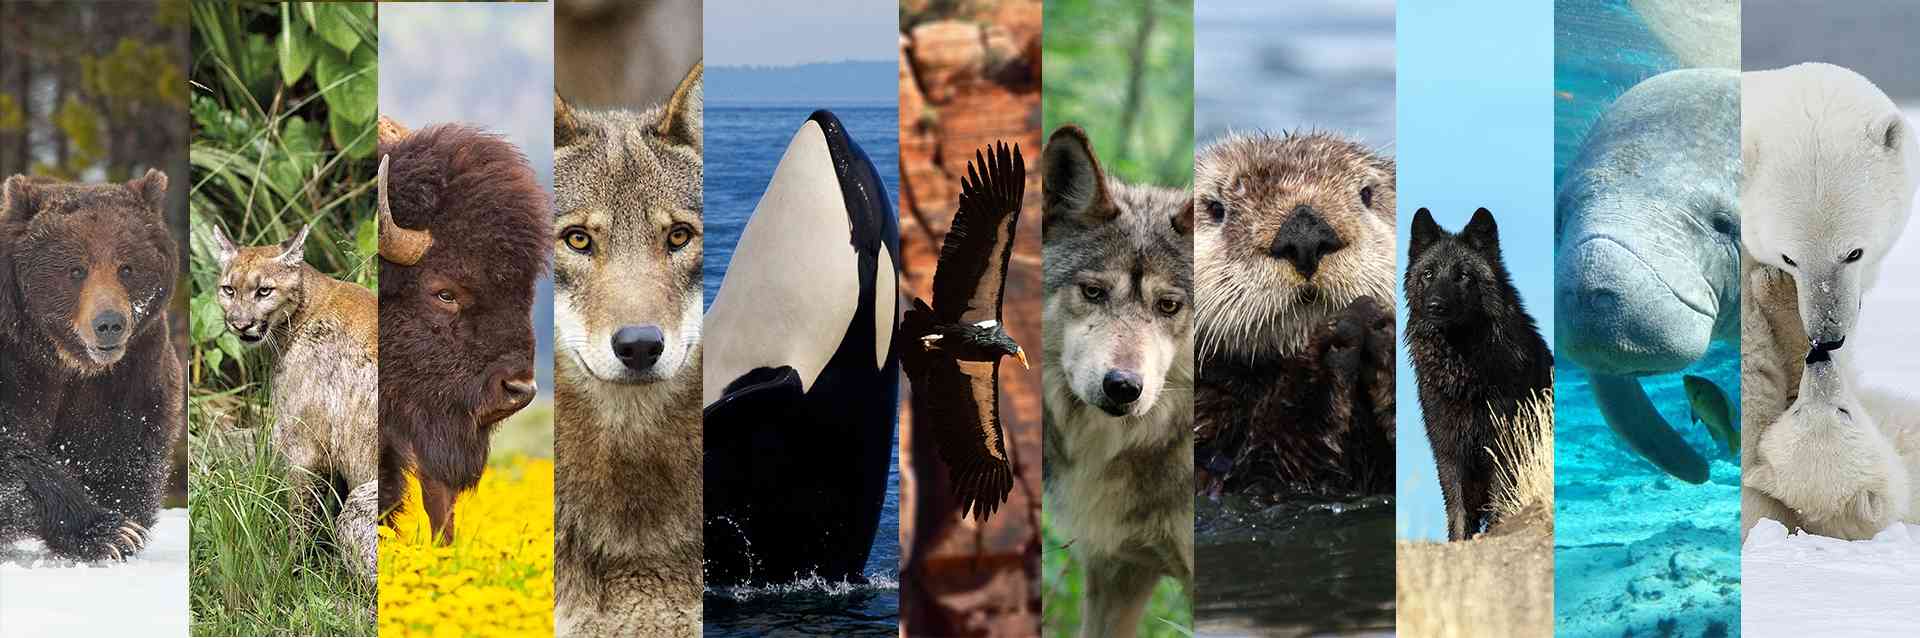 Coexistence Overview | Defenders of Wildlife